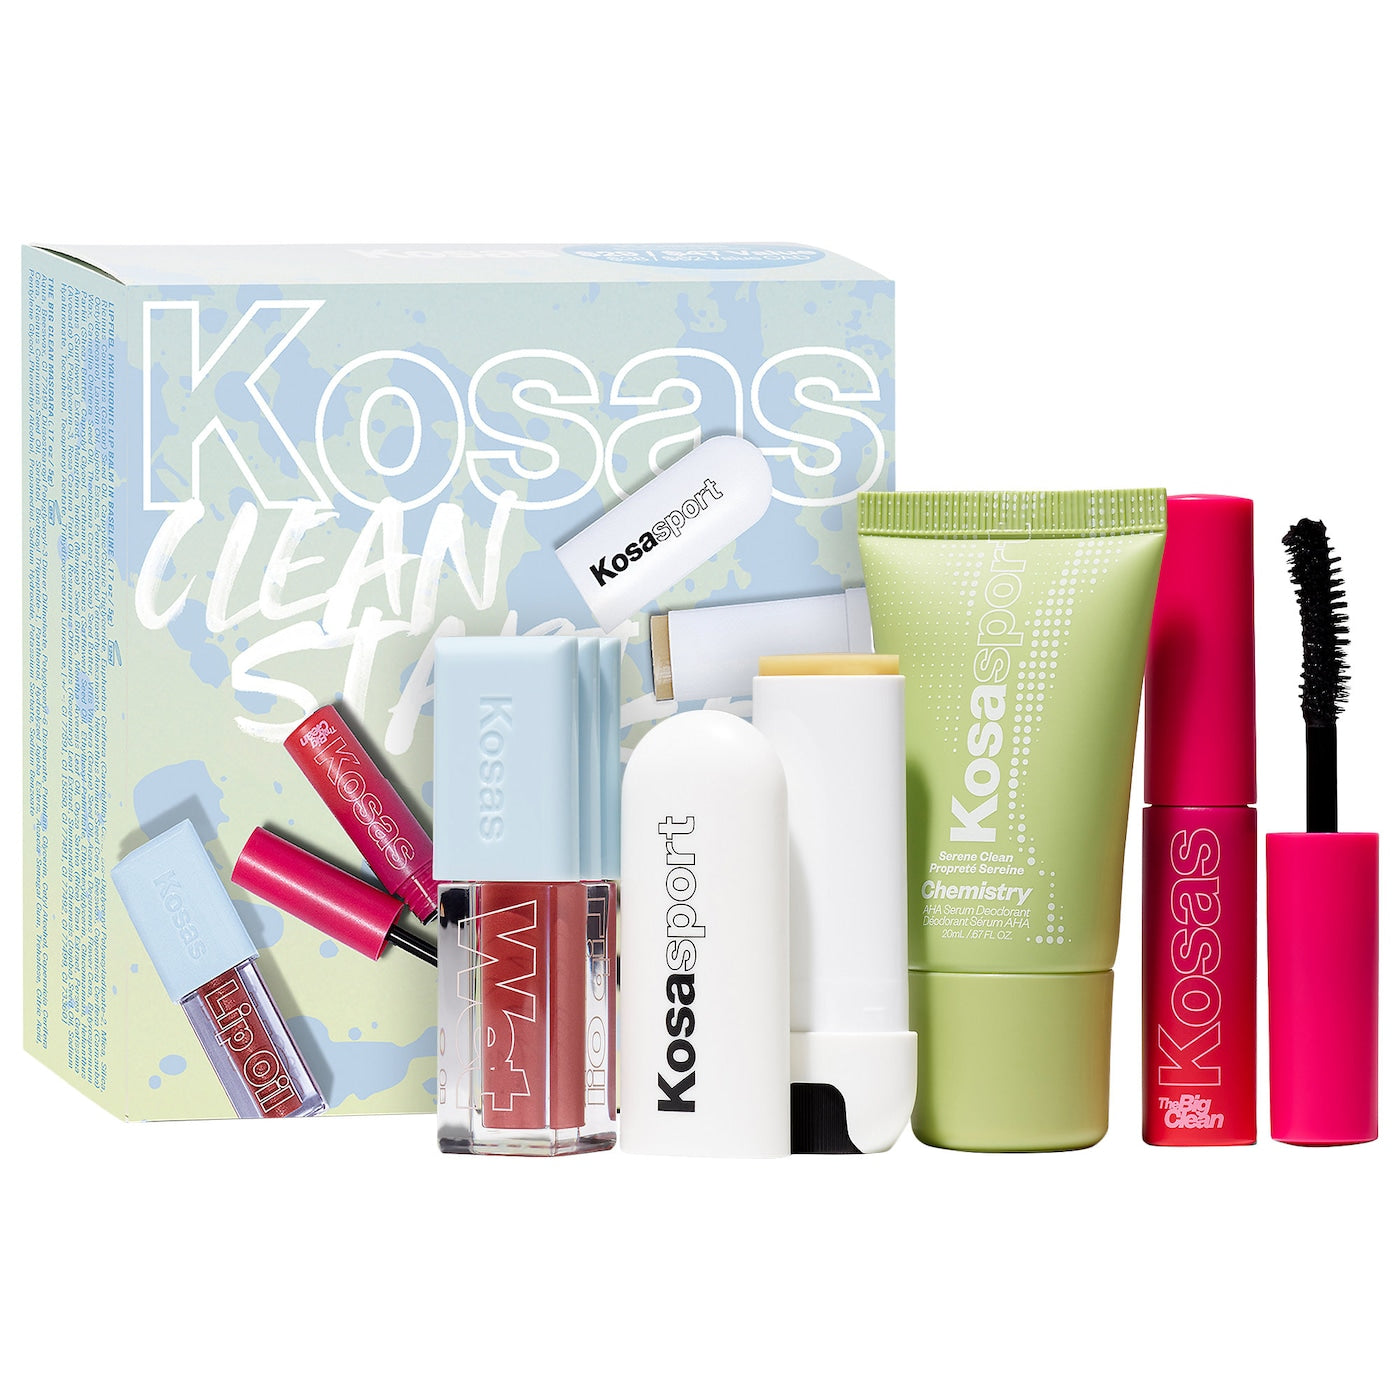 Kosas Mini Clean Start Set: Full Face Bestseller Edition